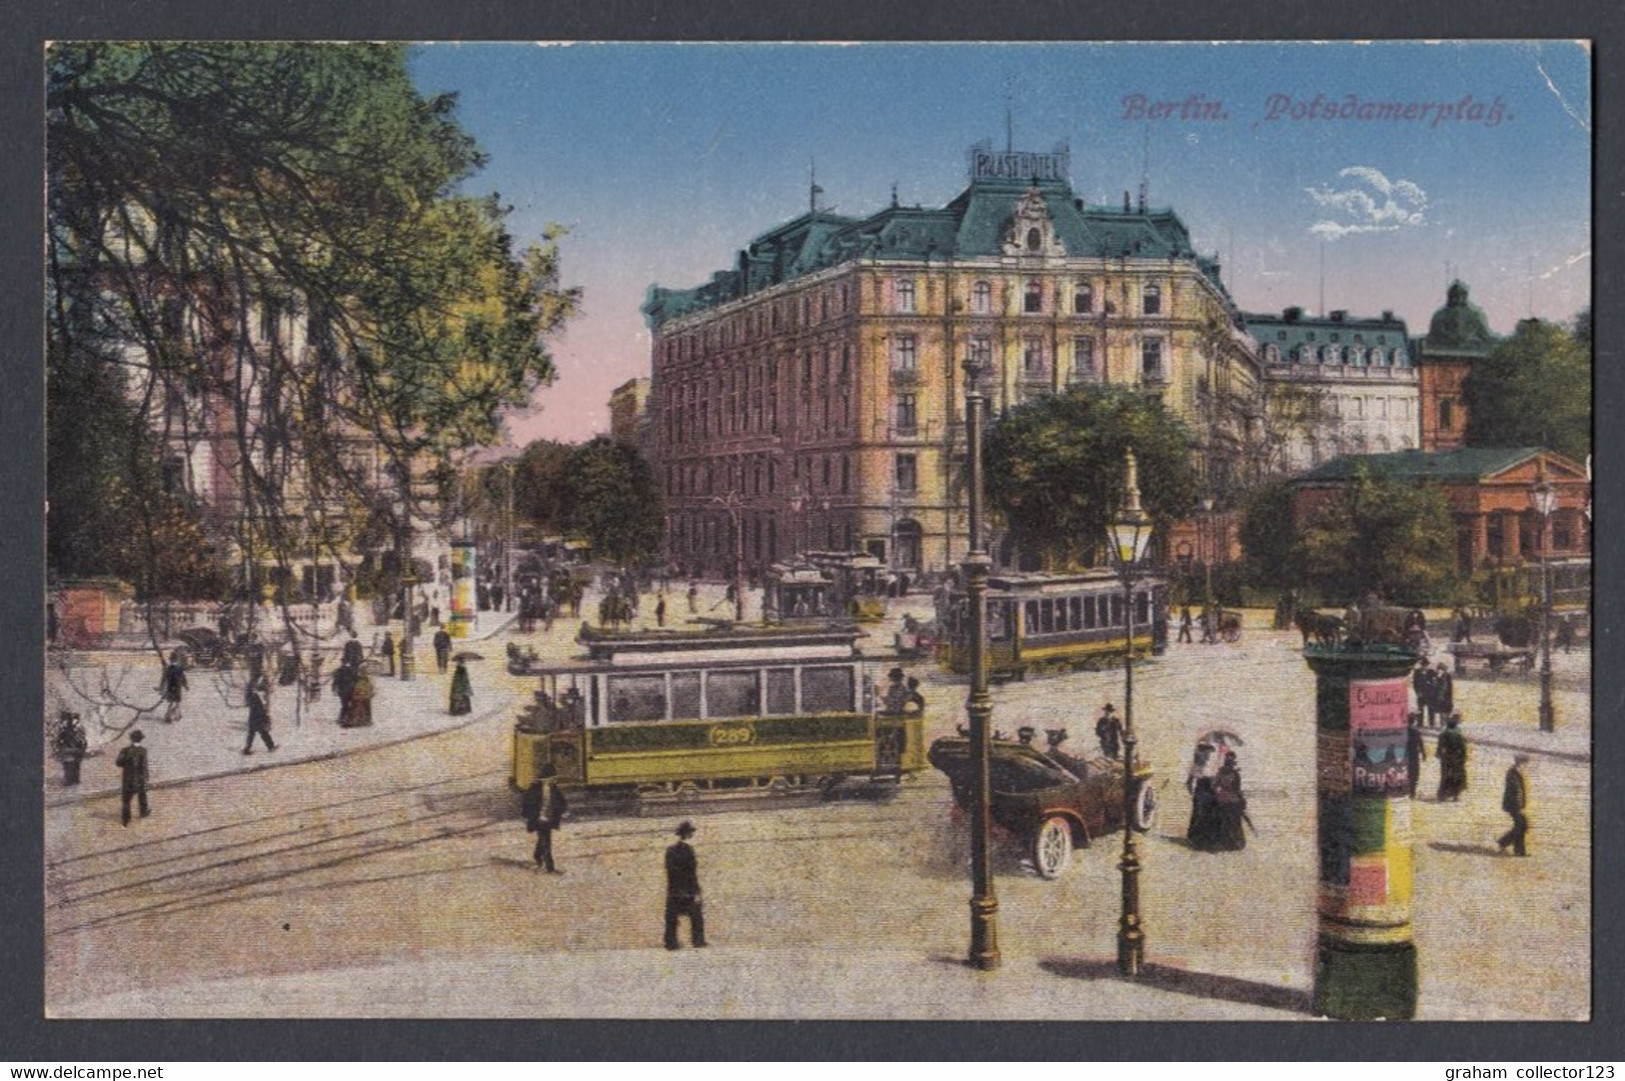 Vintage Printed Postcard Postale Carte Postkarte Berlin Potsdamerpfab Germany Deutsche - Schoeneberg